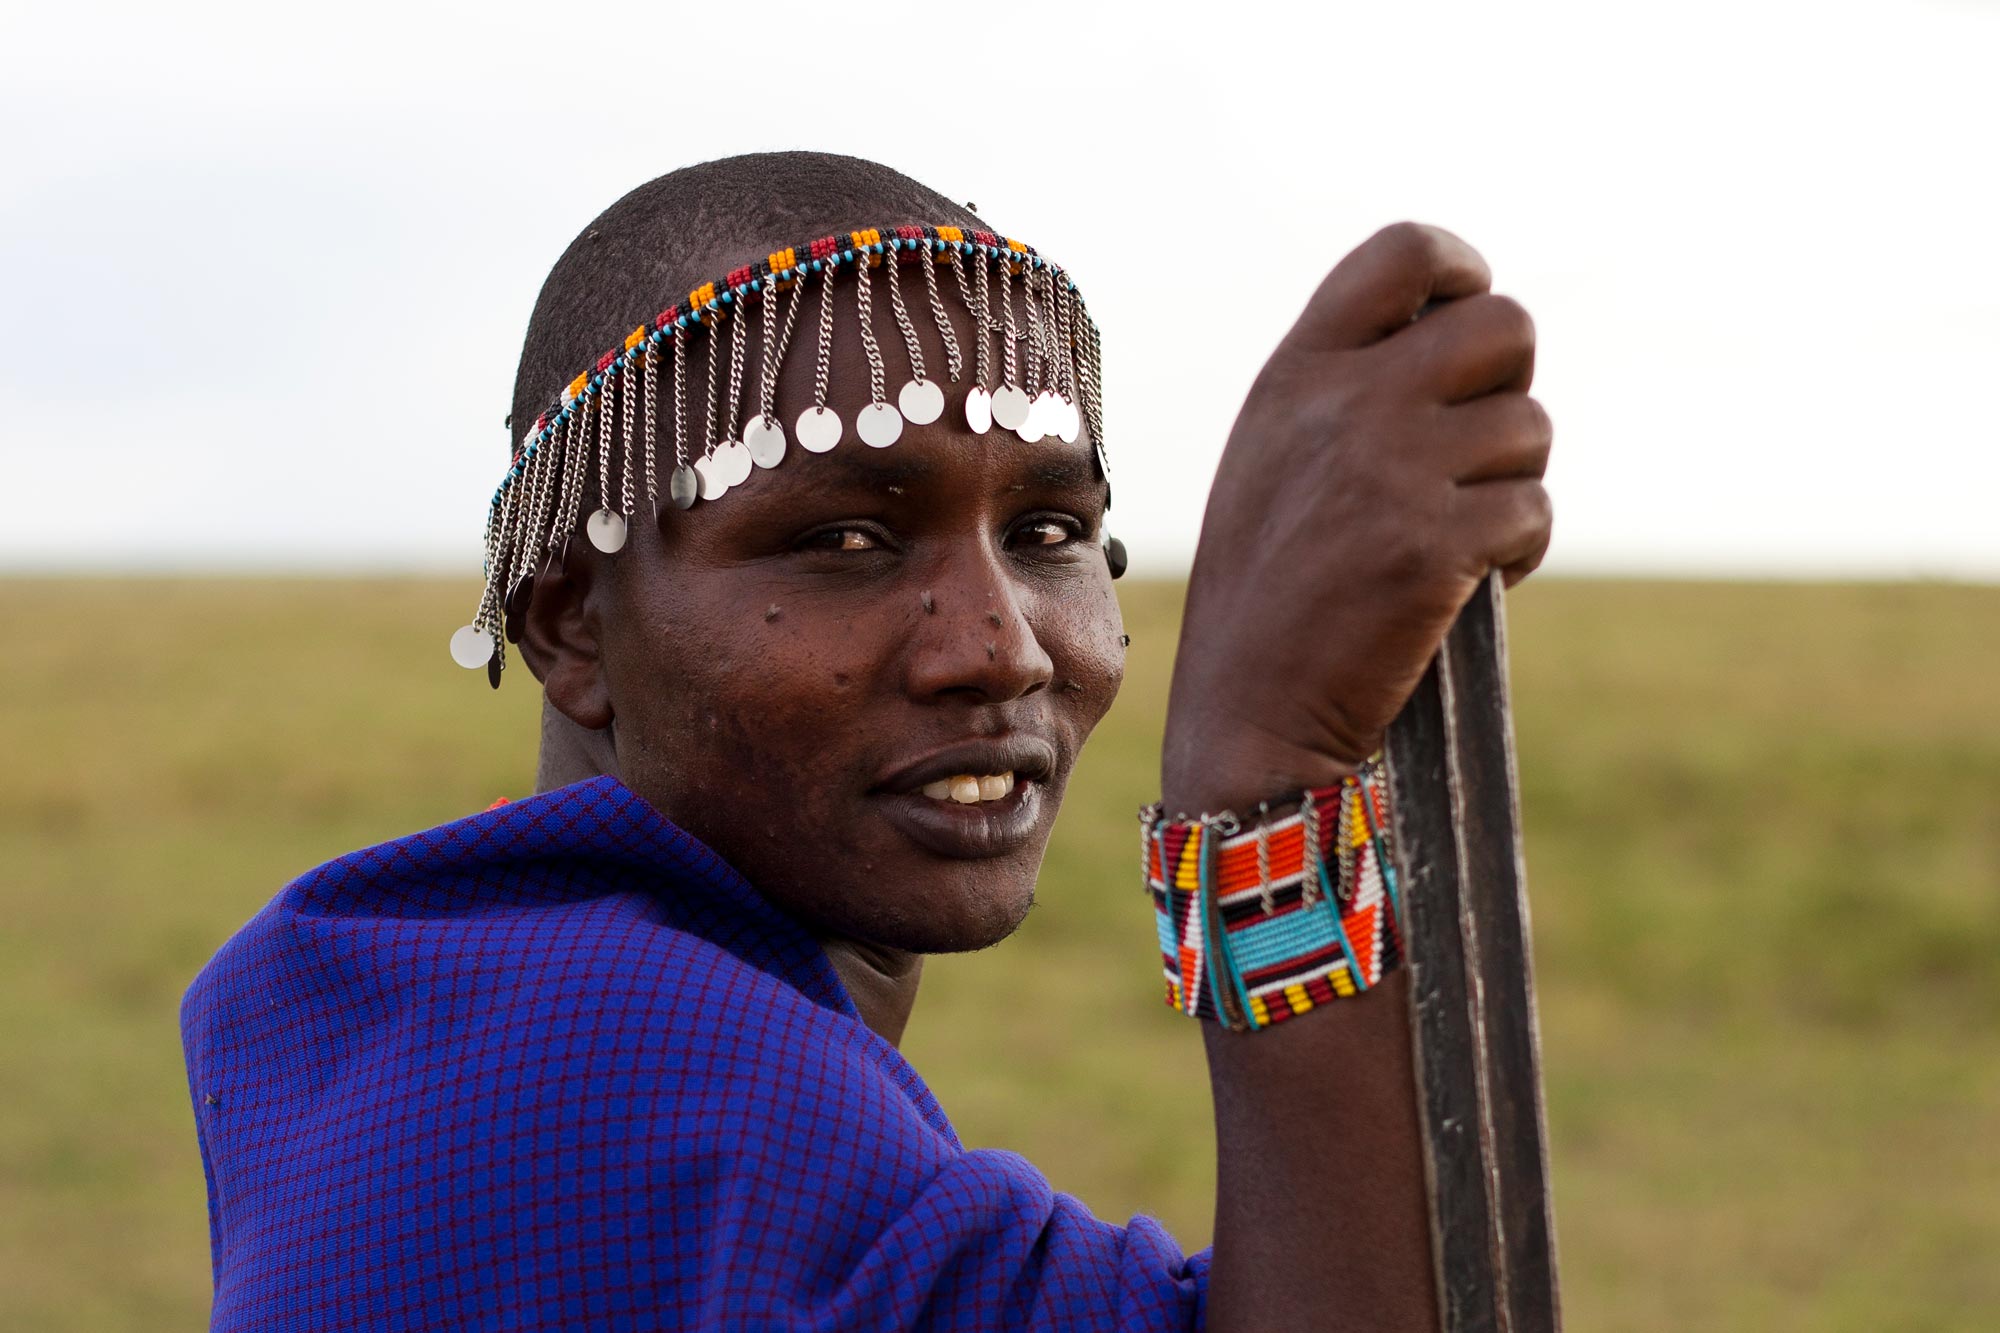 Masai Manyattas